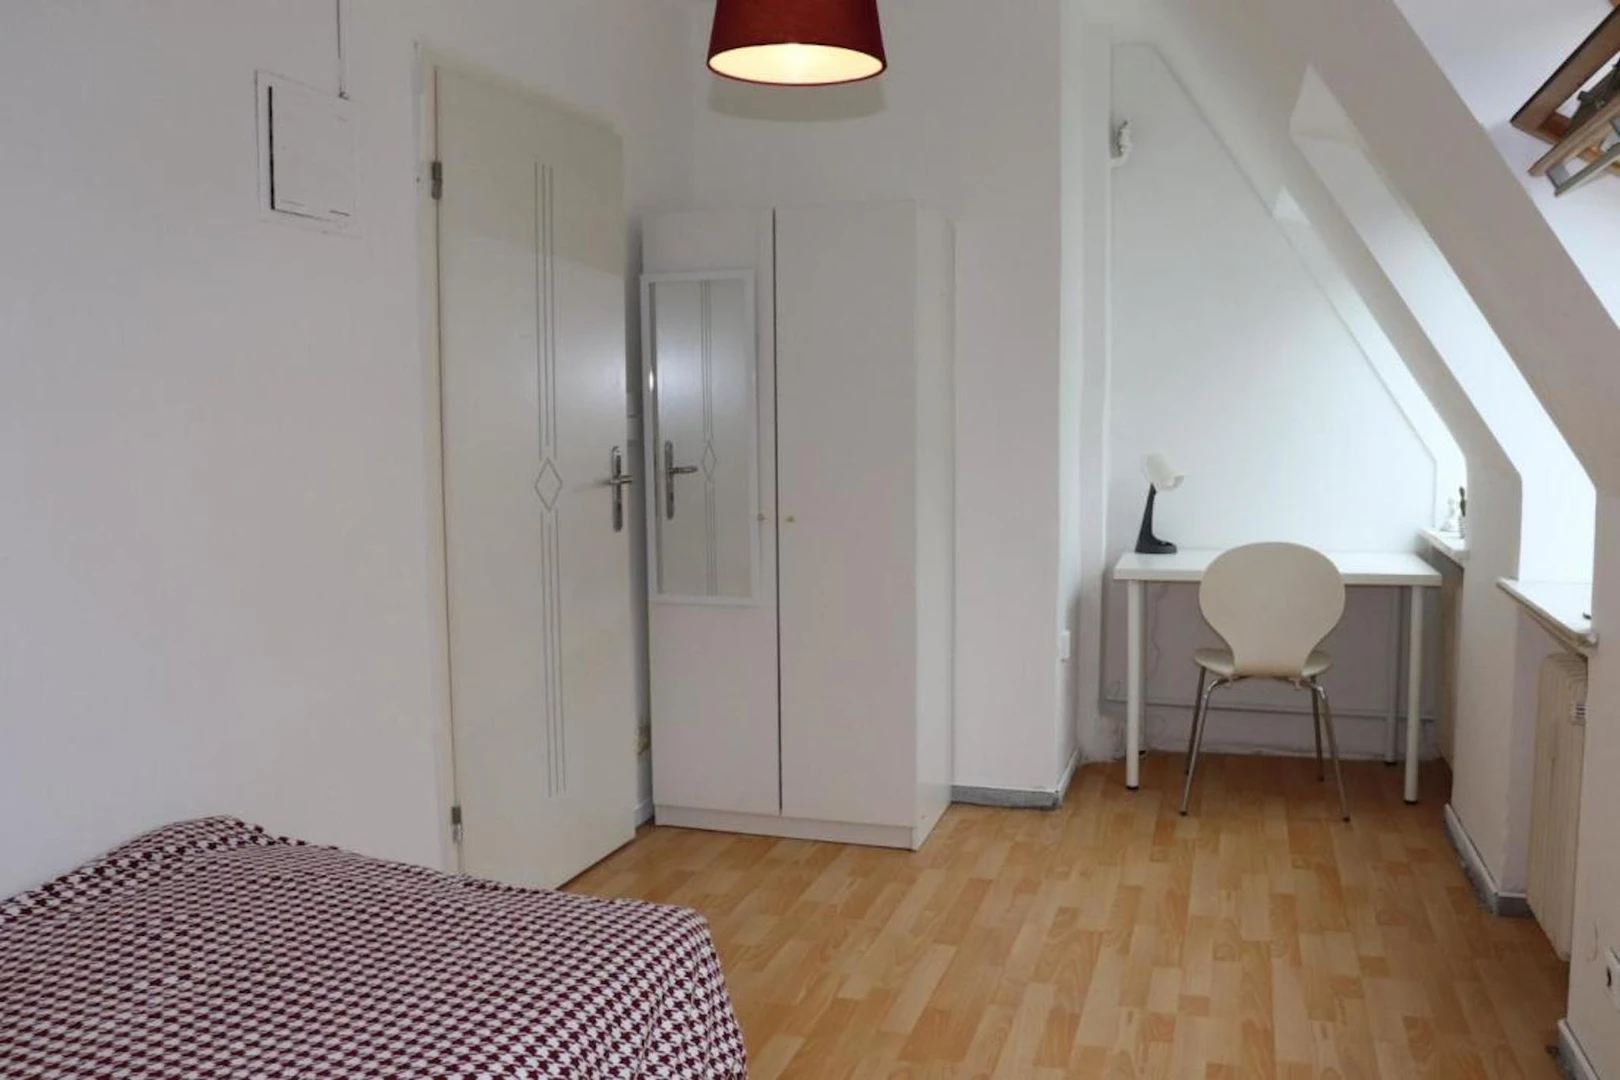 Cheap private room in Bremen